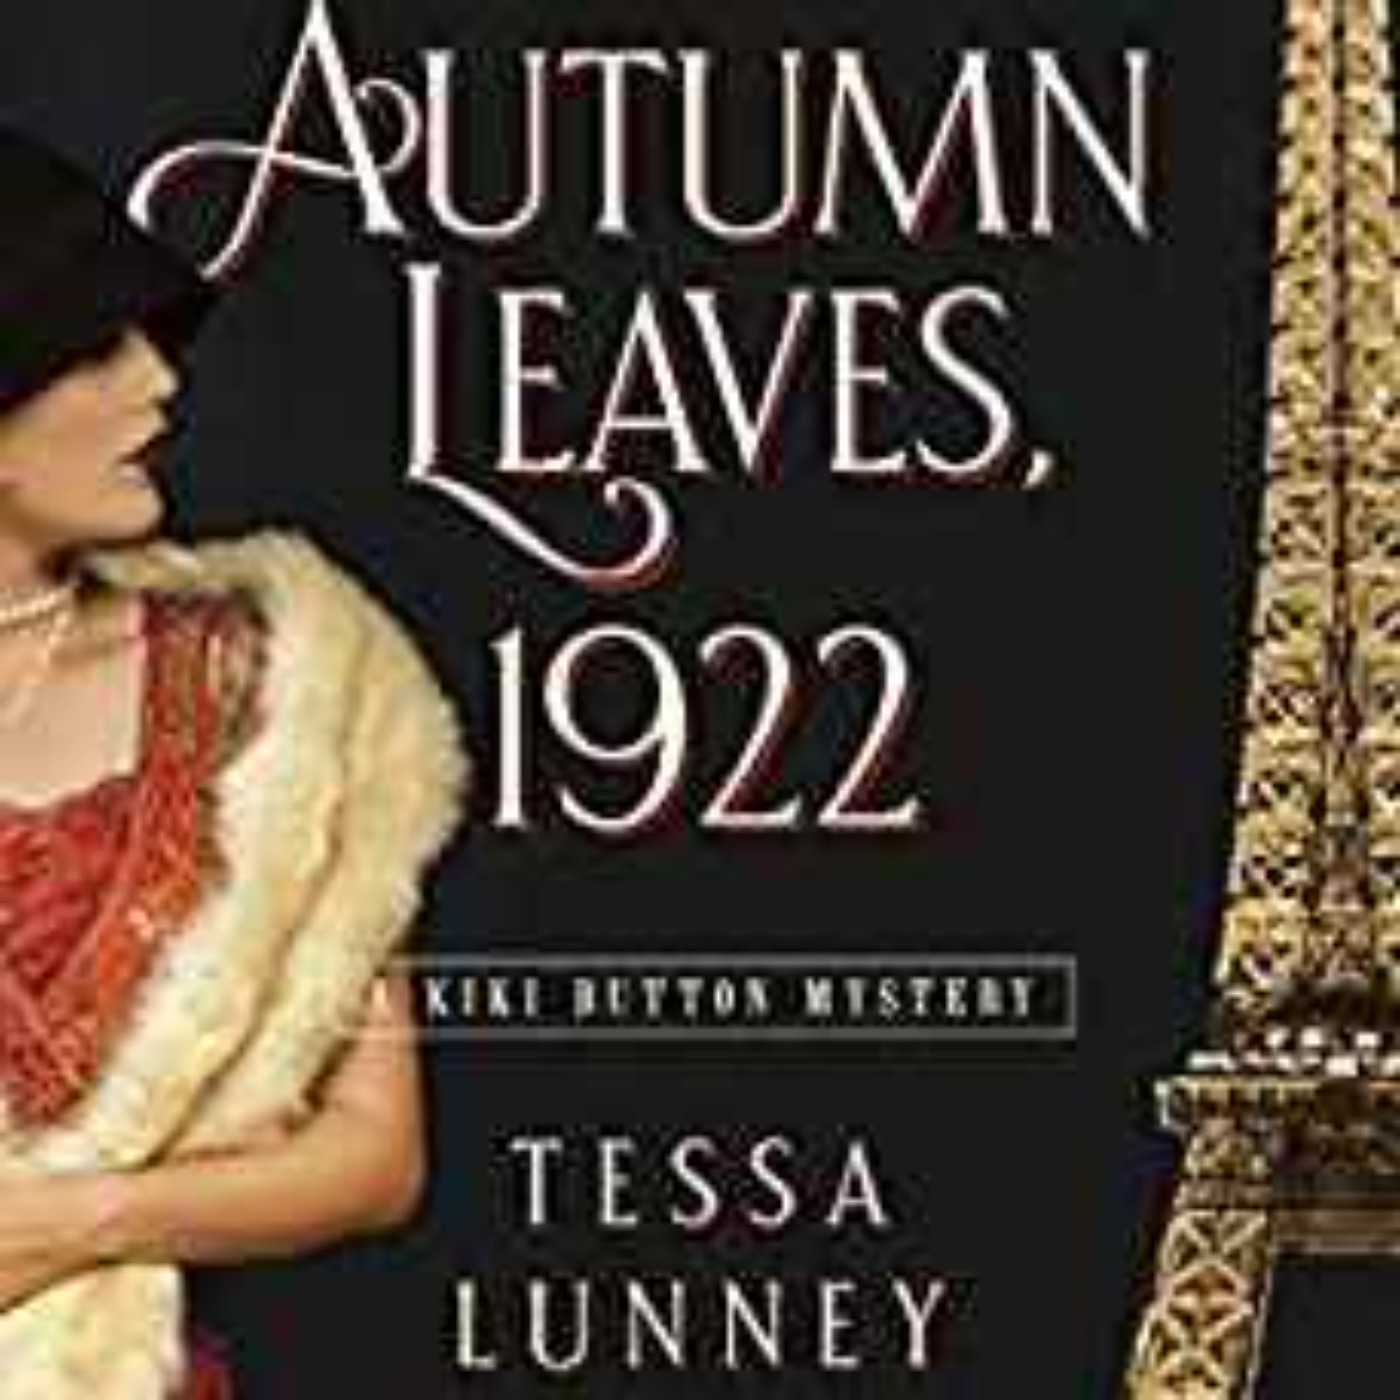 Tessa Lunney - Autumn Leaves, 1922: A Kiki Button Mystery